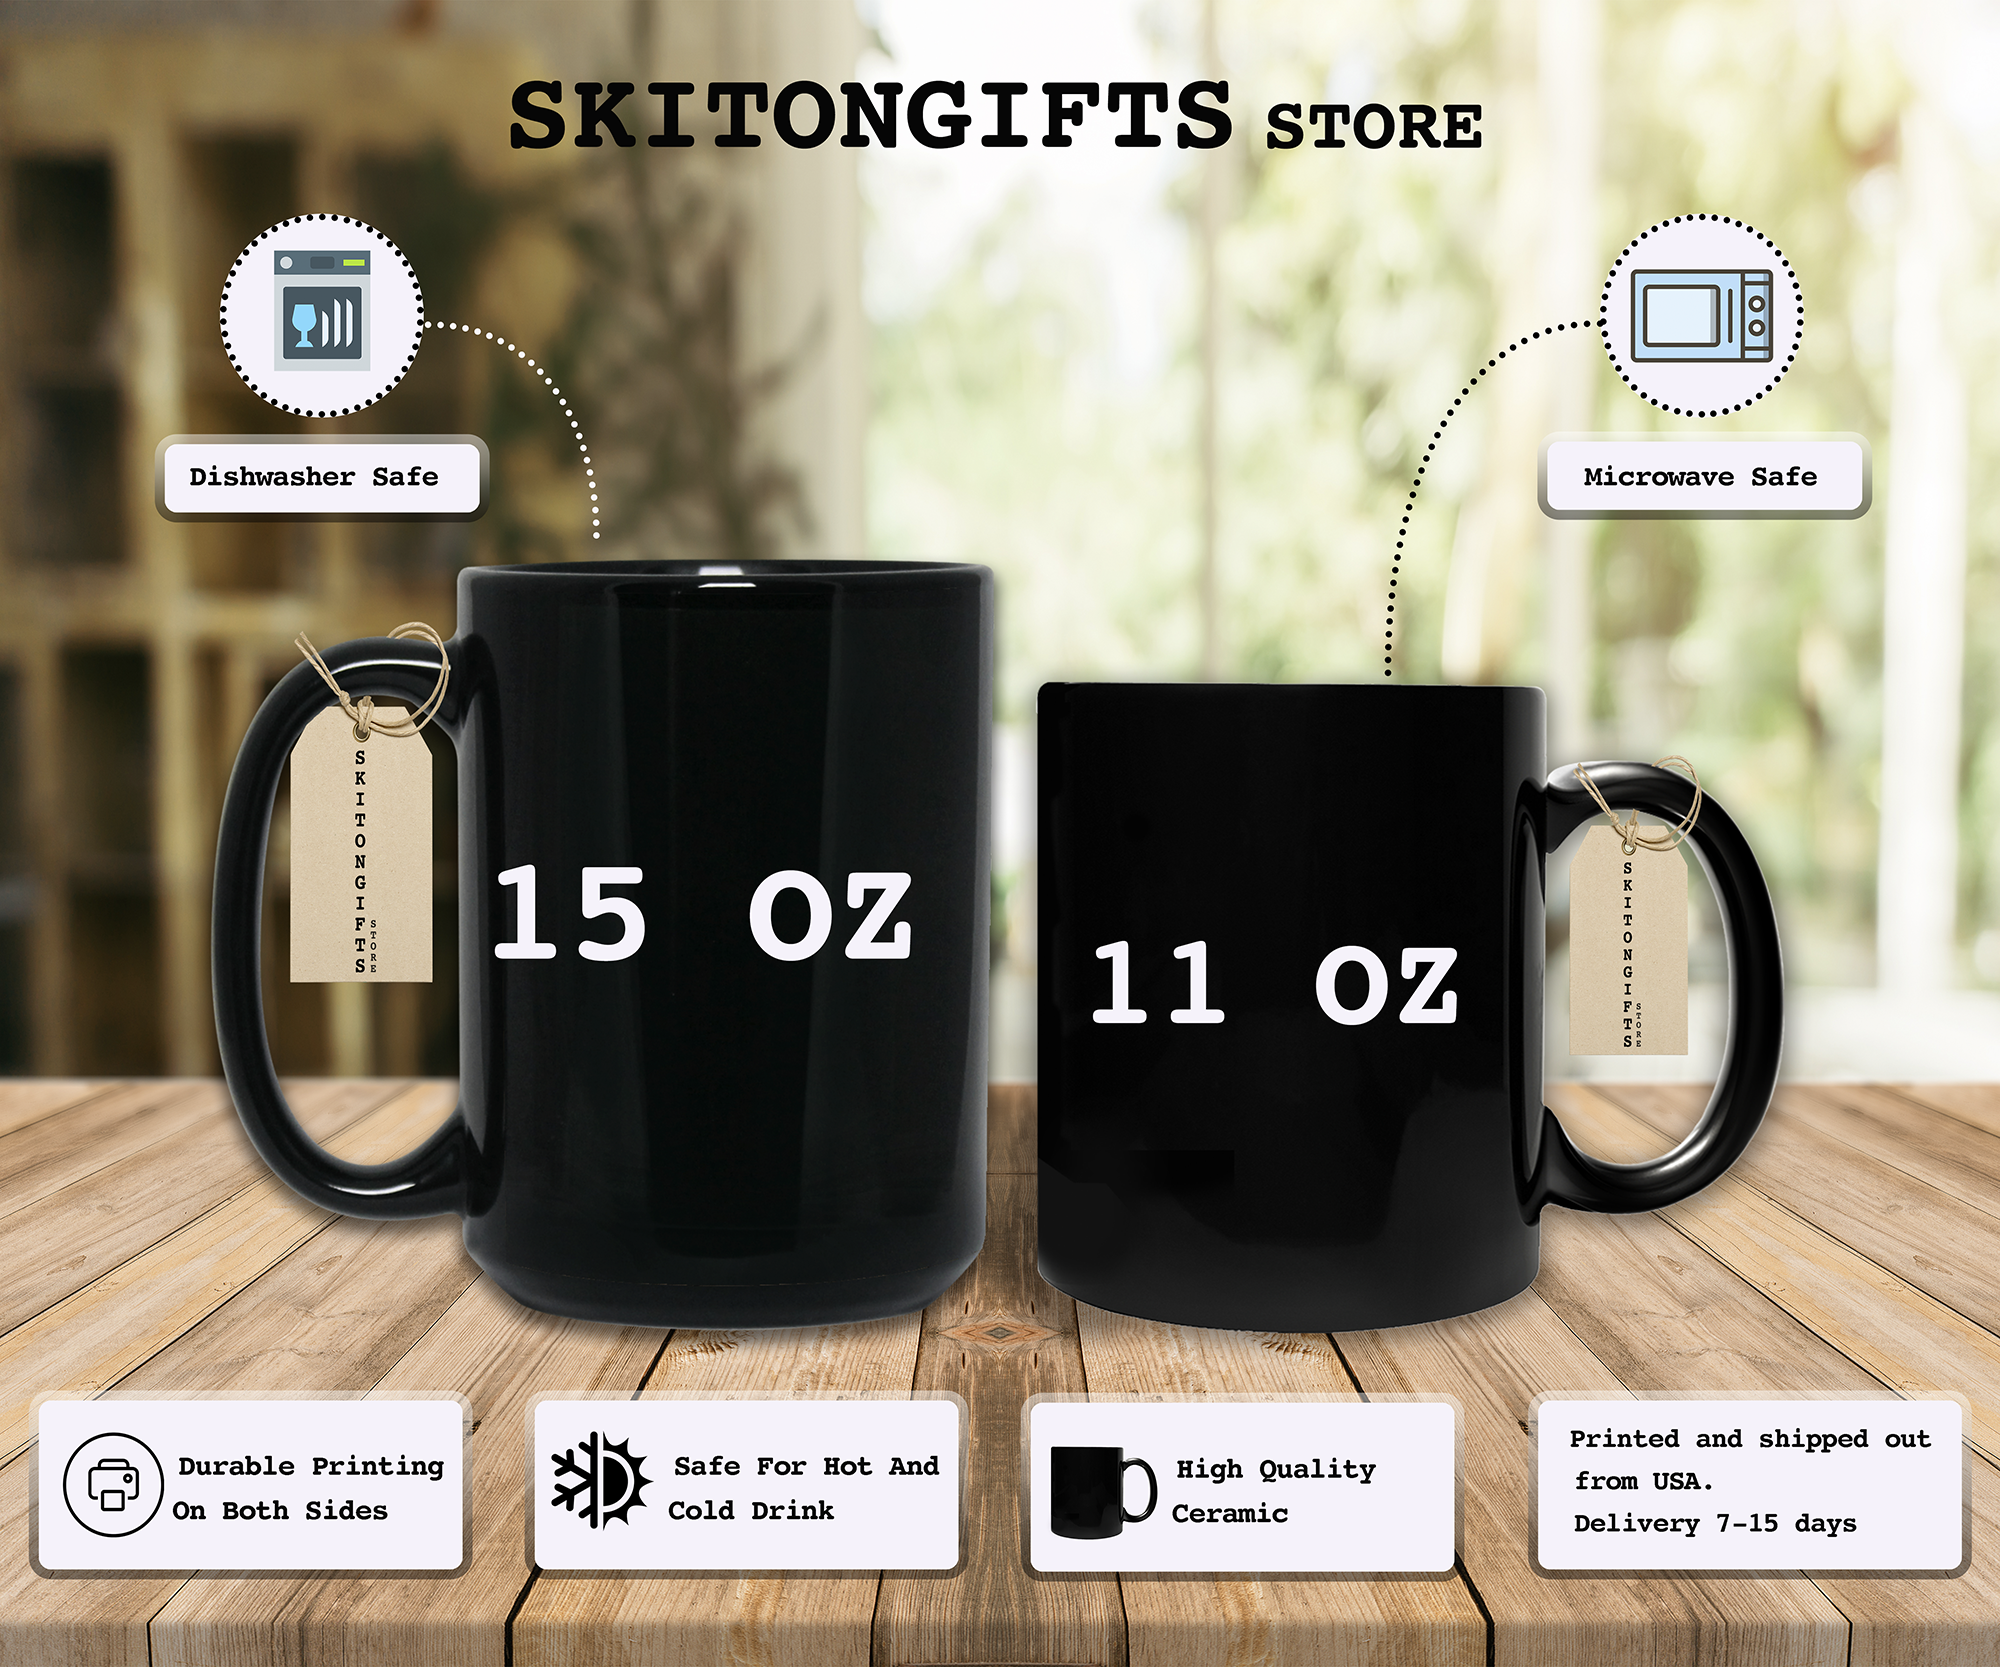 Skitongift Ceramic Novelty Coffee Mug K Cancer Mug